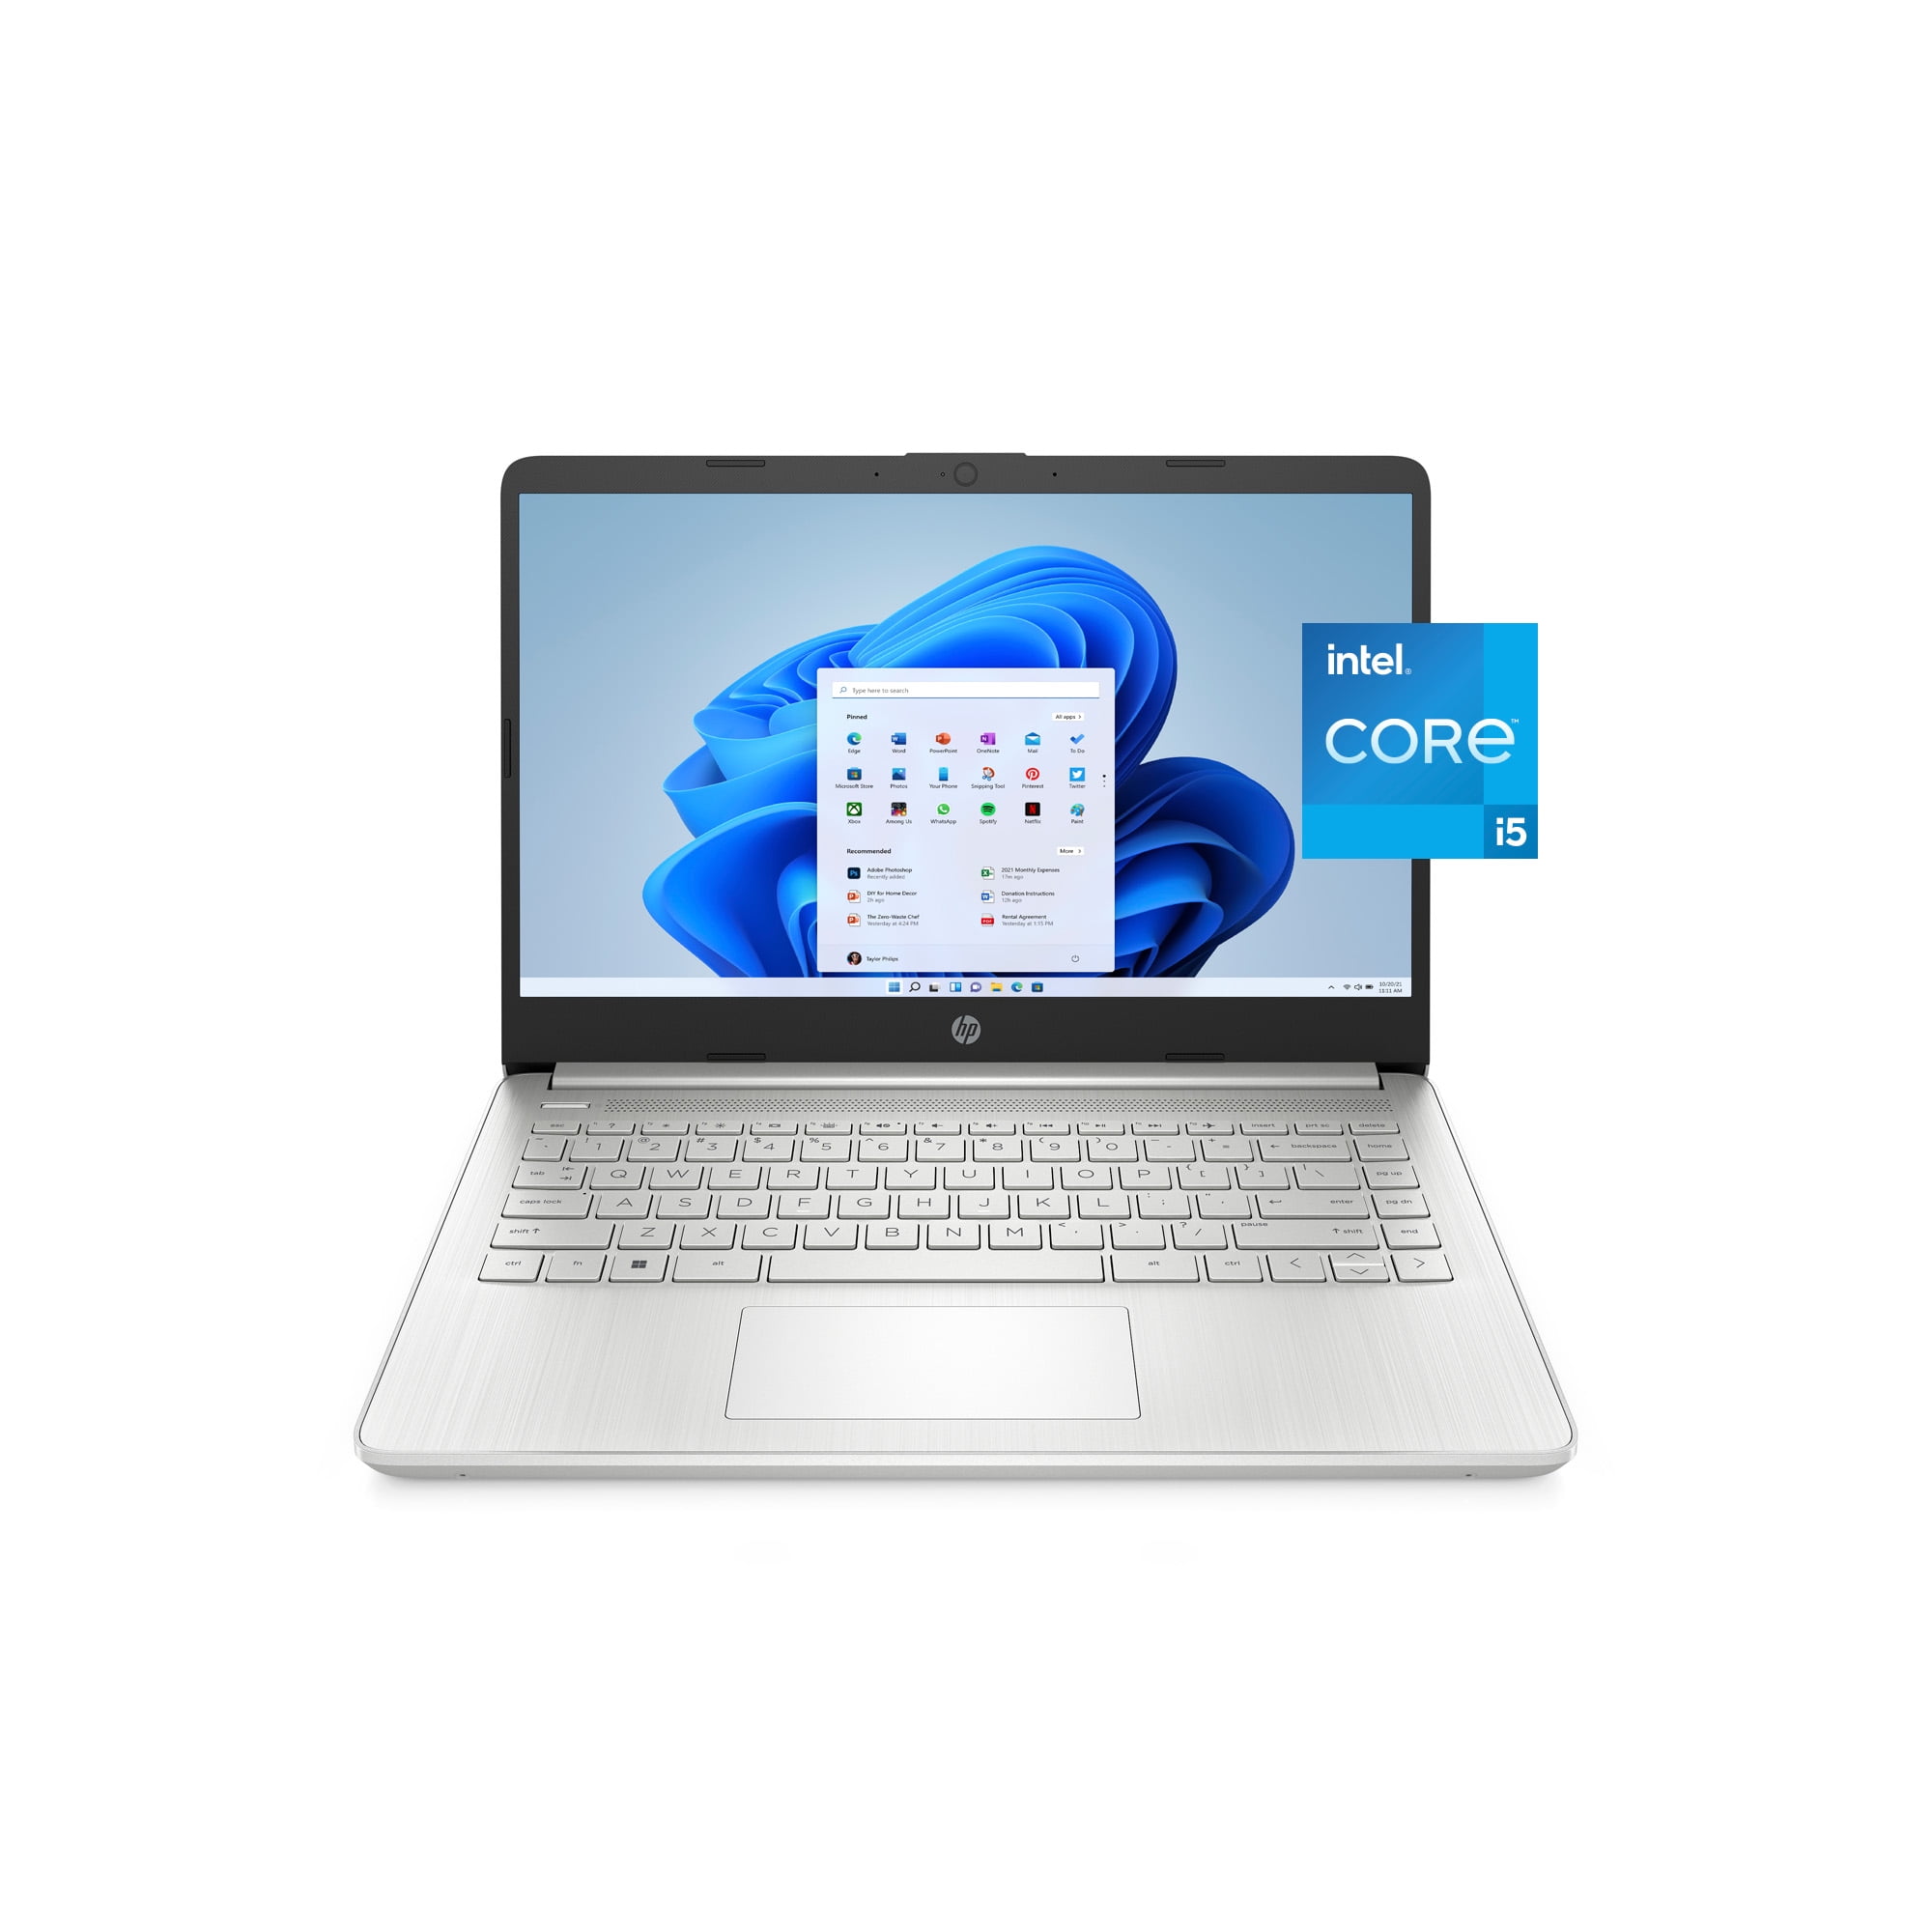 Progreso Convocar Retocar HP 14" Laptop, Intel Core i5-1135G7, 8GB RAM, 256GB SSD, Natural Silver,  Windows 11 Home, 14-dq2078wm - Walmart.com